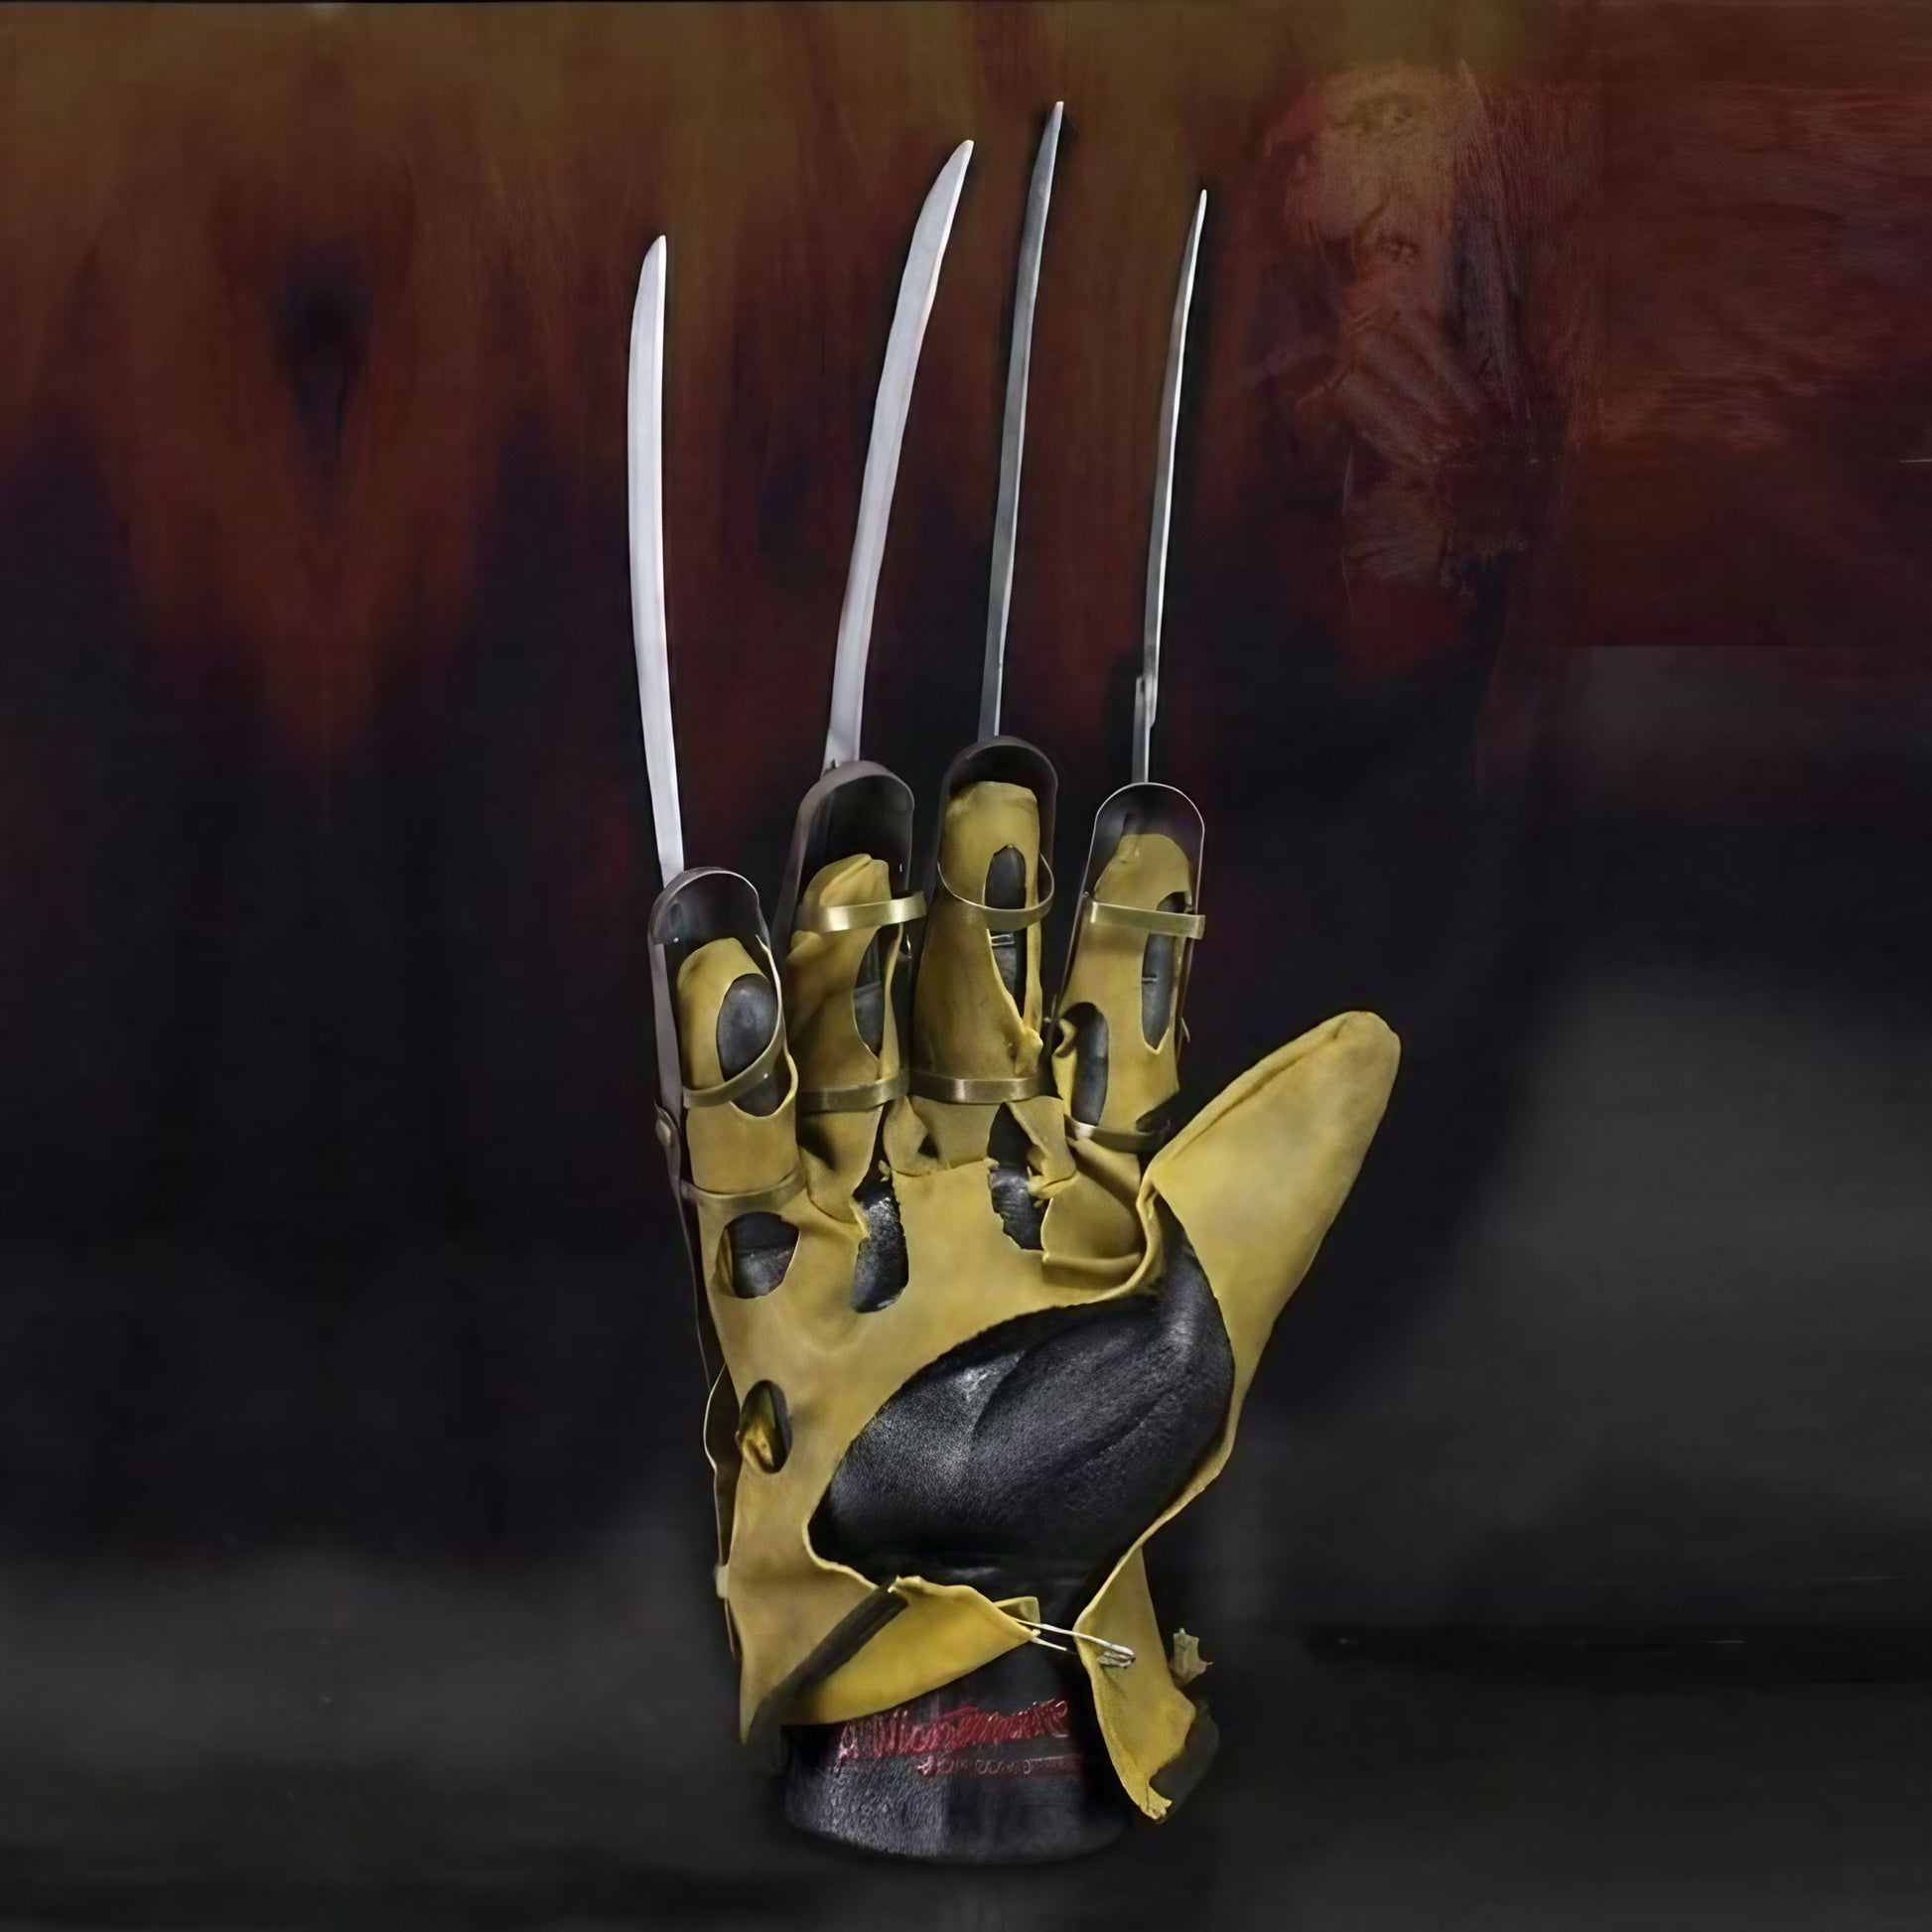 Deluxe Freddy Krueger glove replica from "Nightmare on Elm Street" by Neca